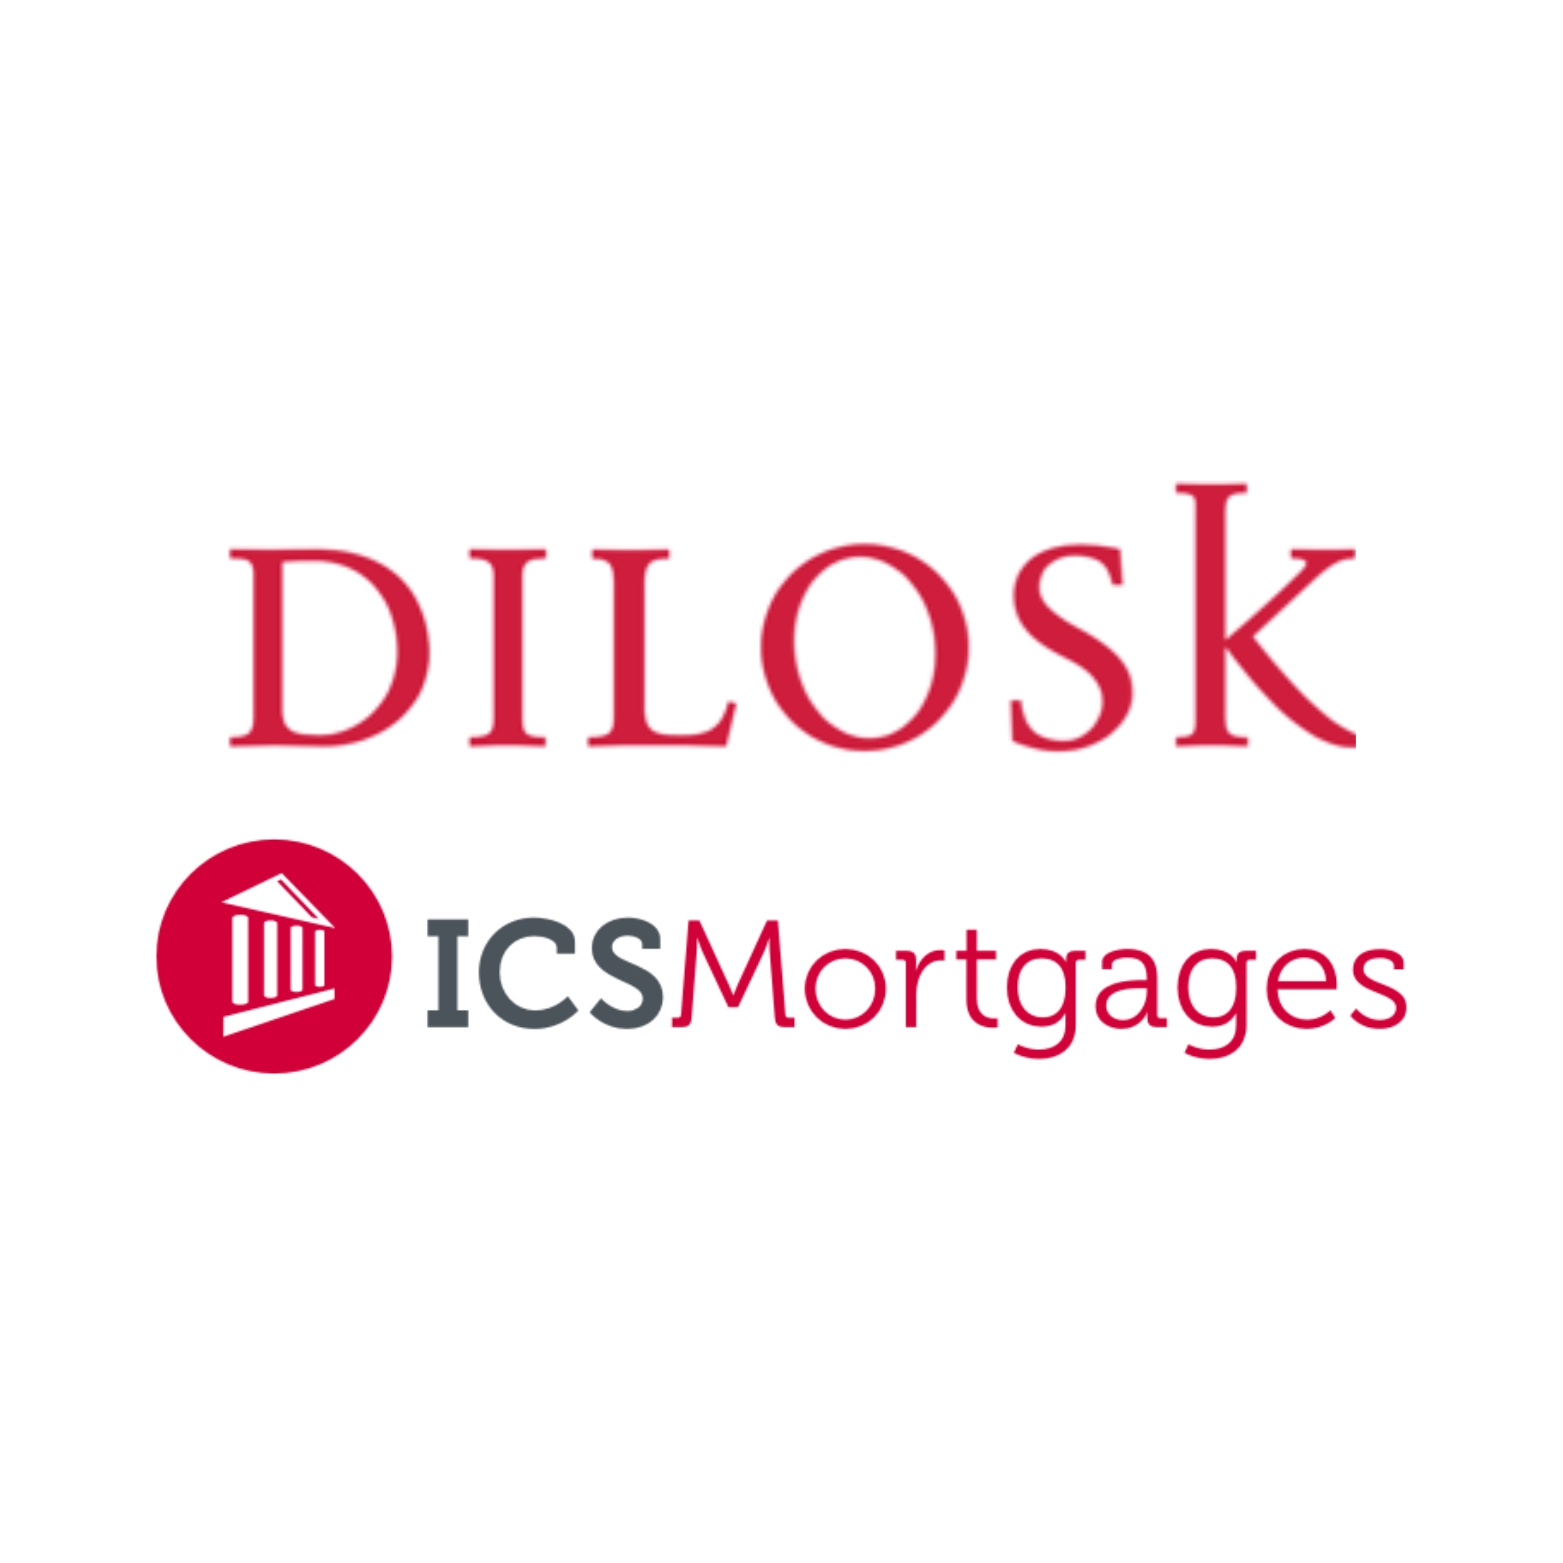 Dilosk ICS